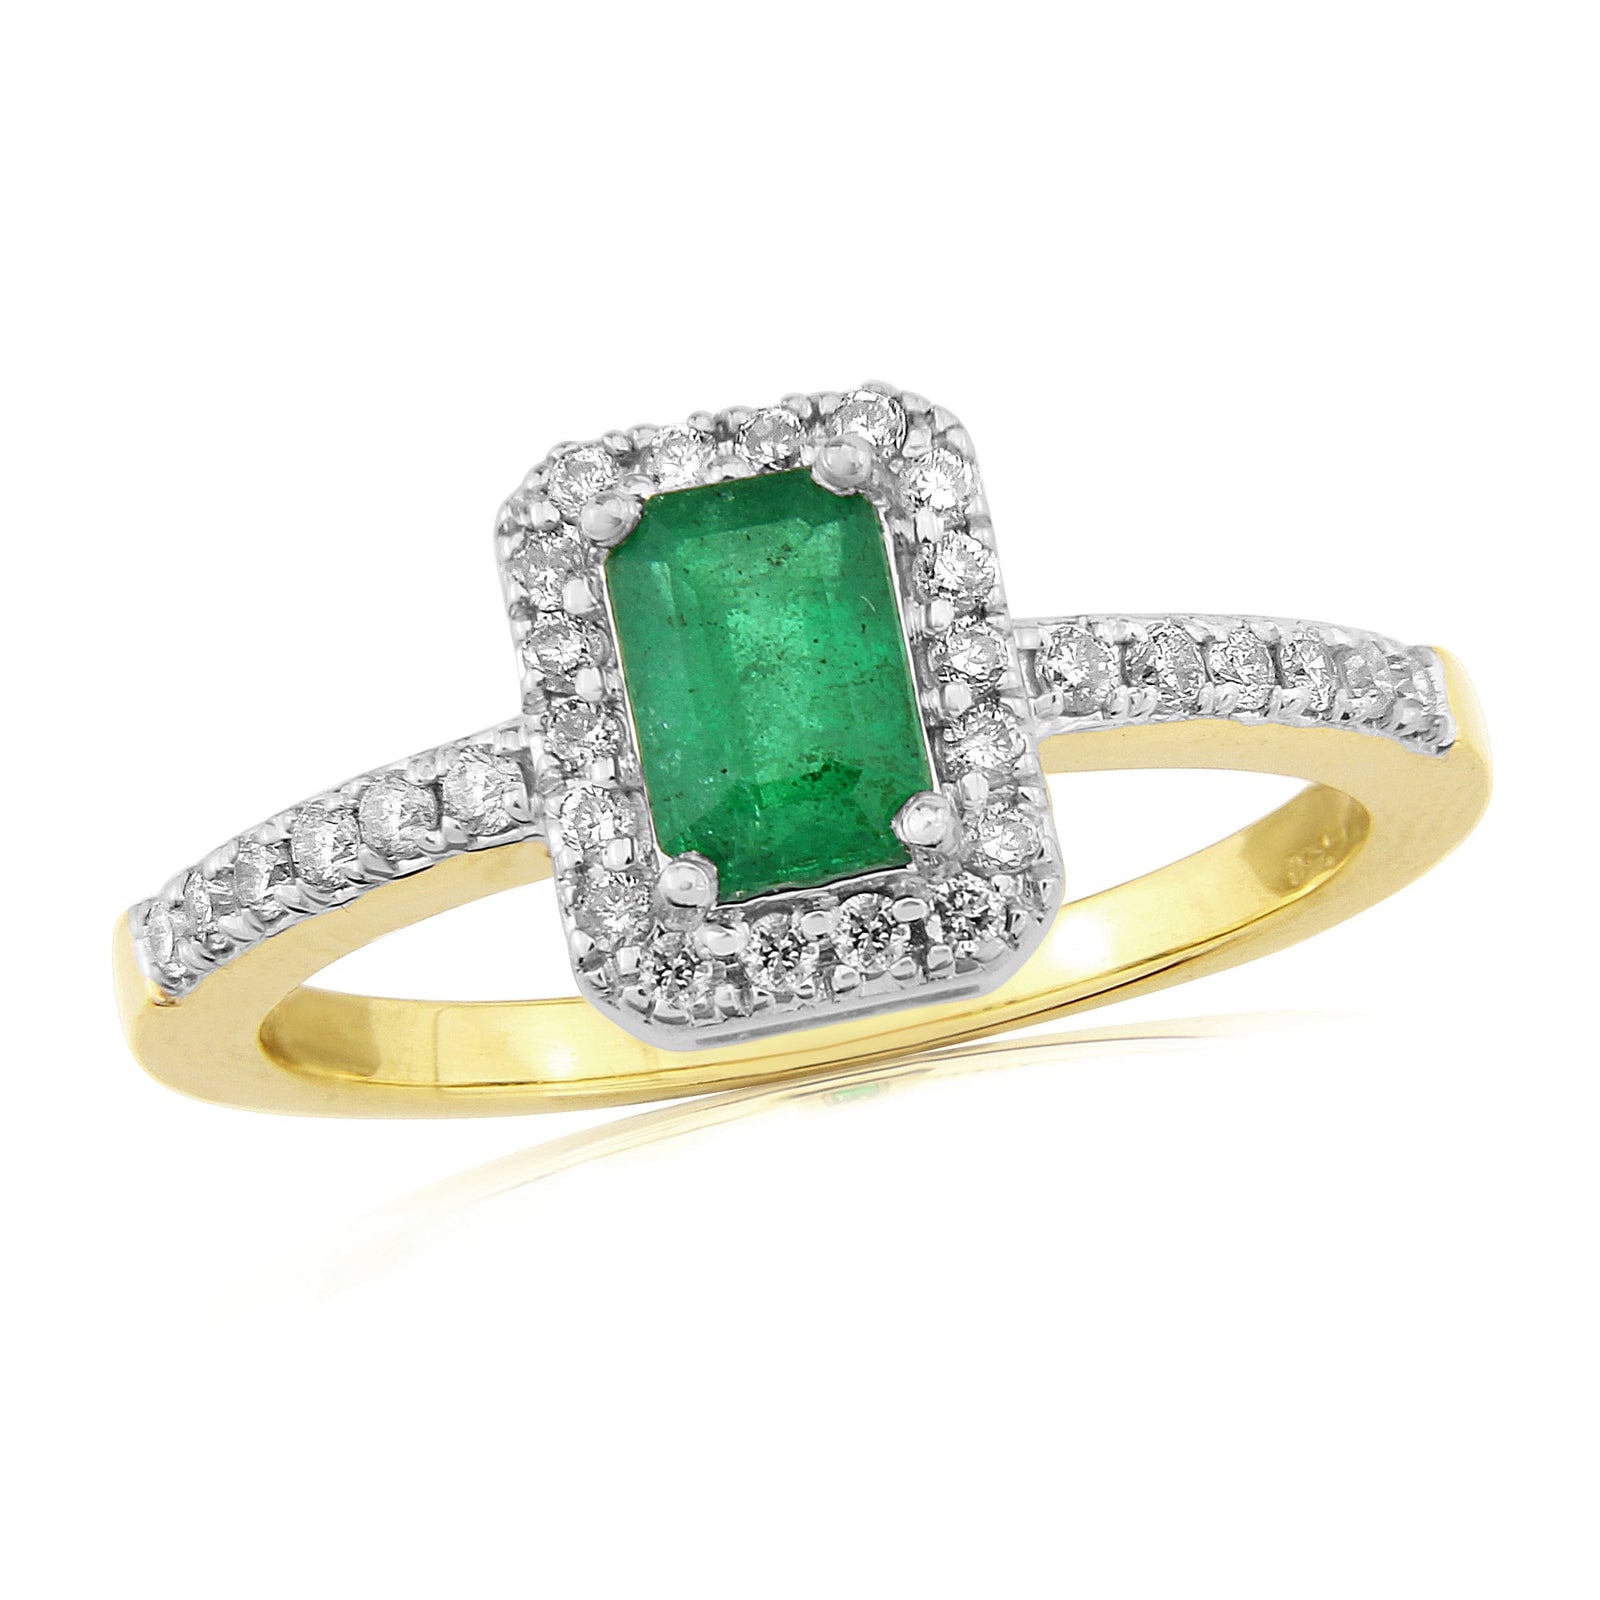 9ct gold 6x4mm octagon cut emerald & diamond cluster ring 0.23ct